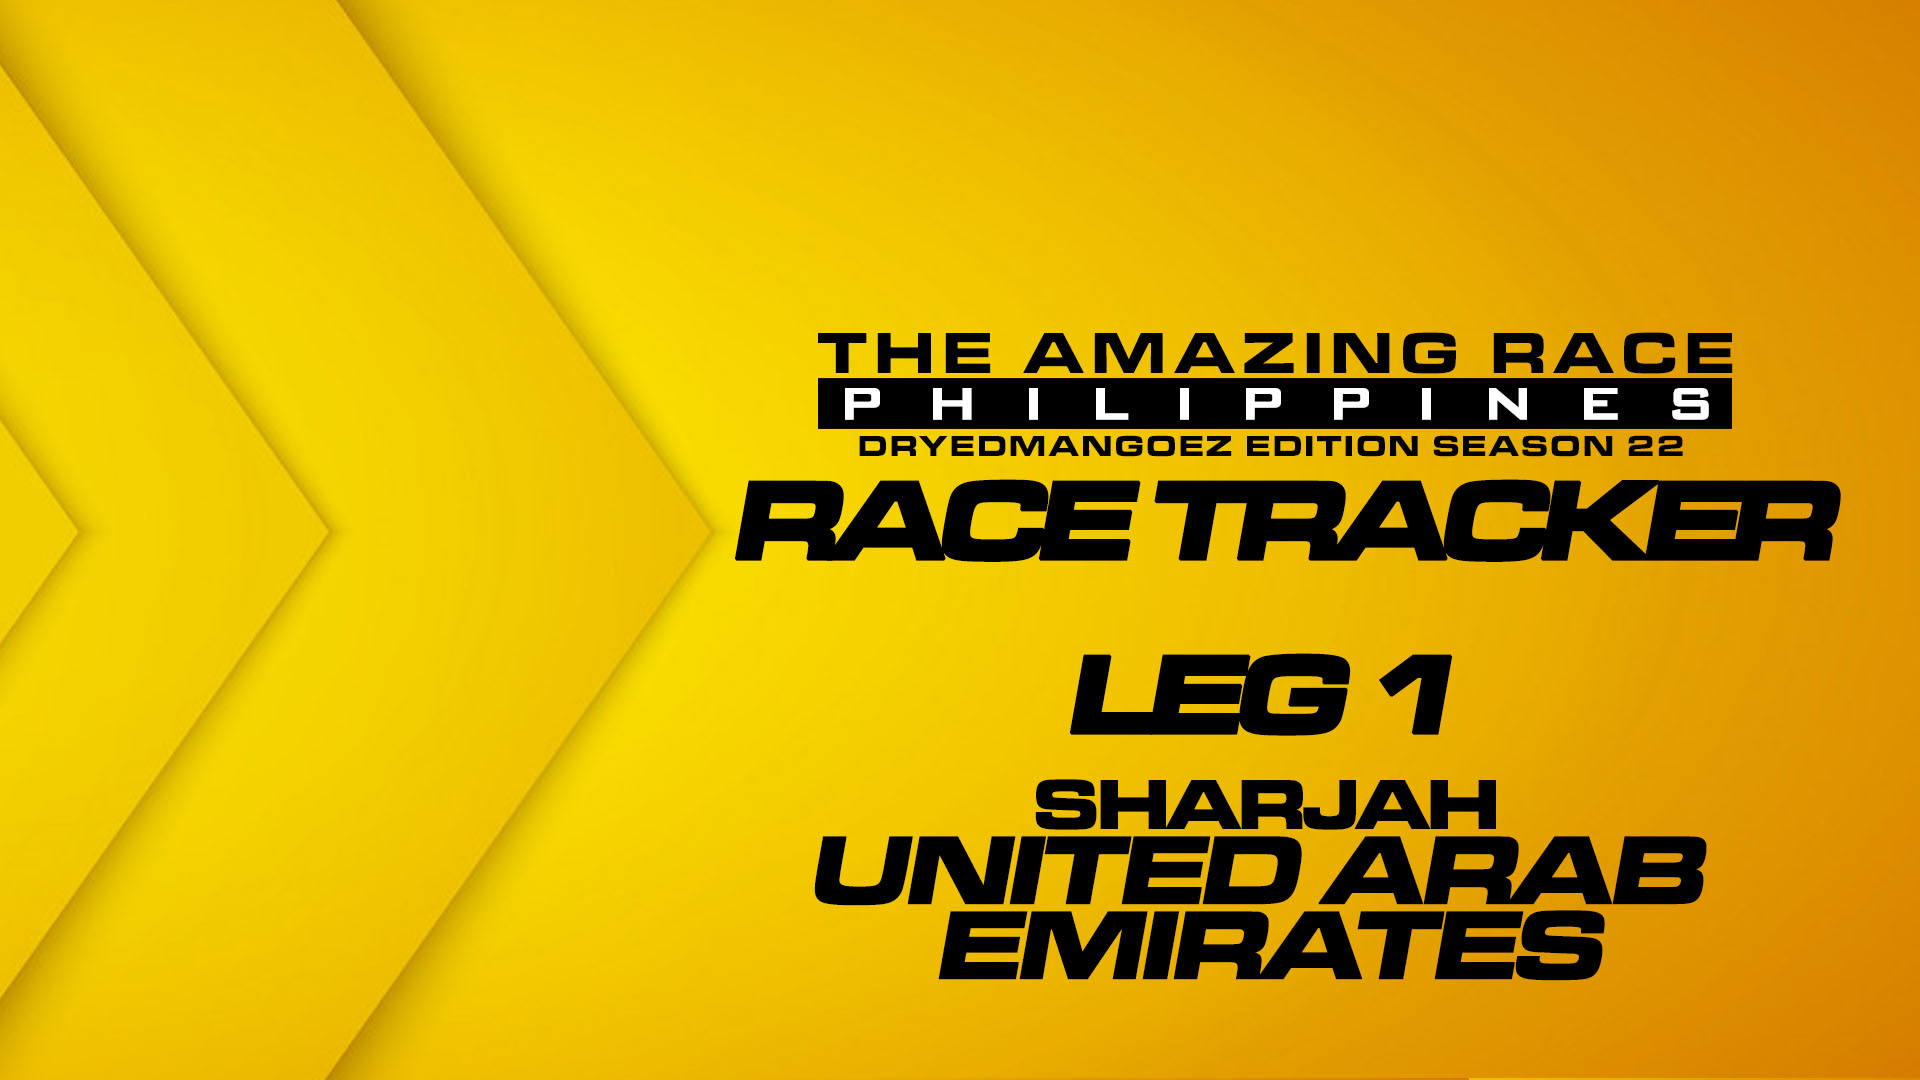 The Amazing Race Philippines: DryedMangoez Edition Season 22 Race Tracker – Leg 1